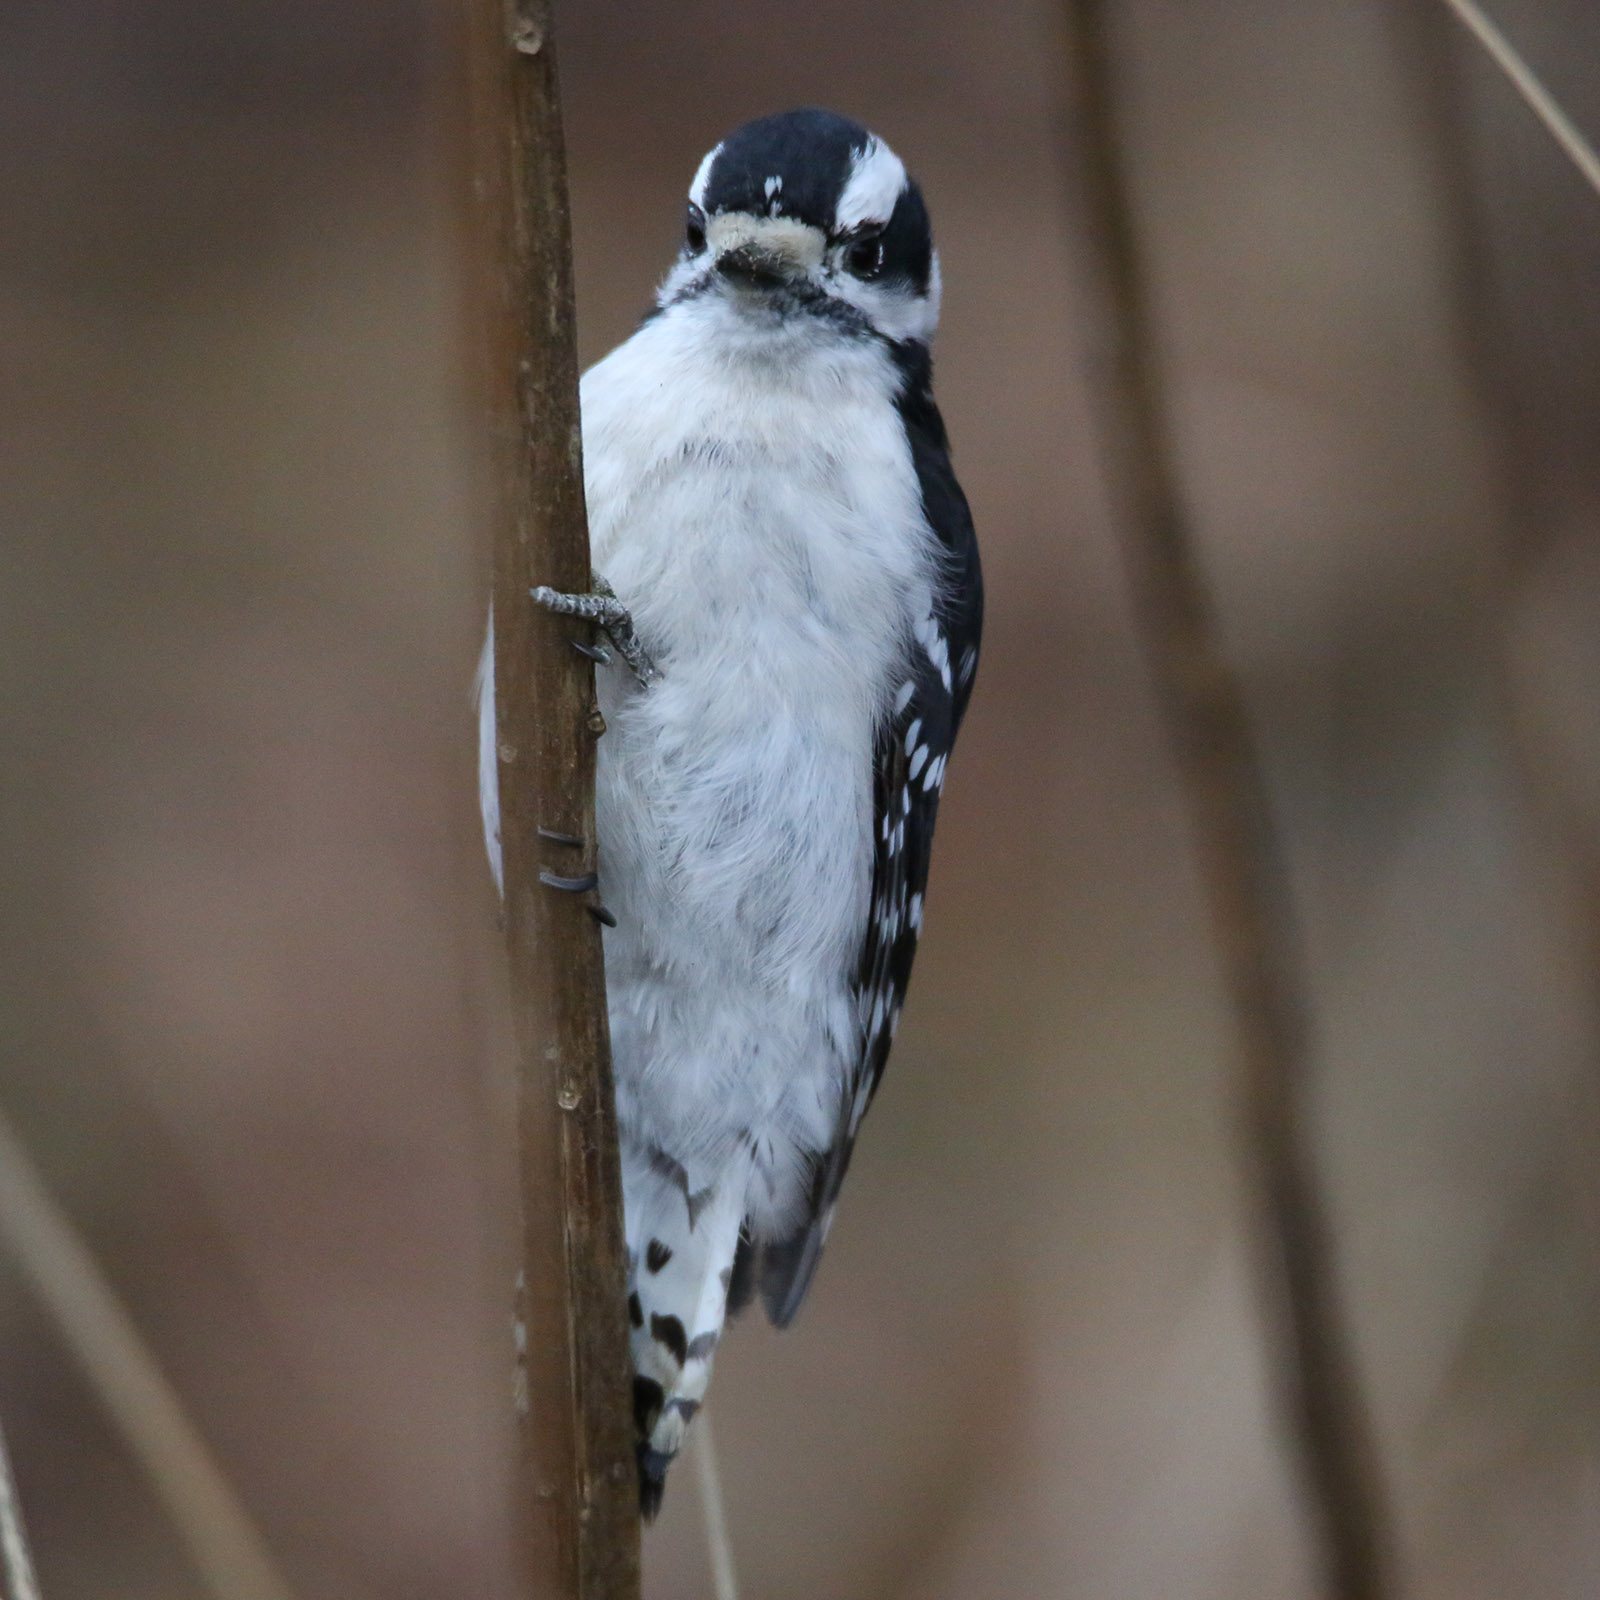 A downy woodpecker